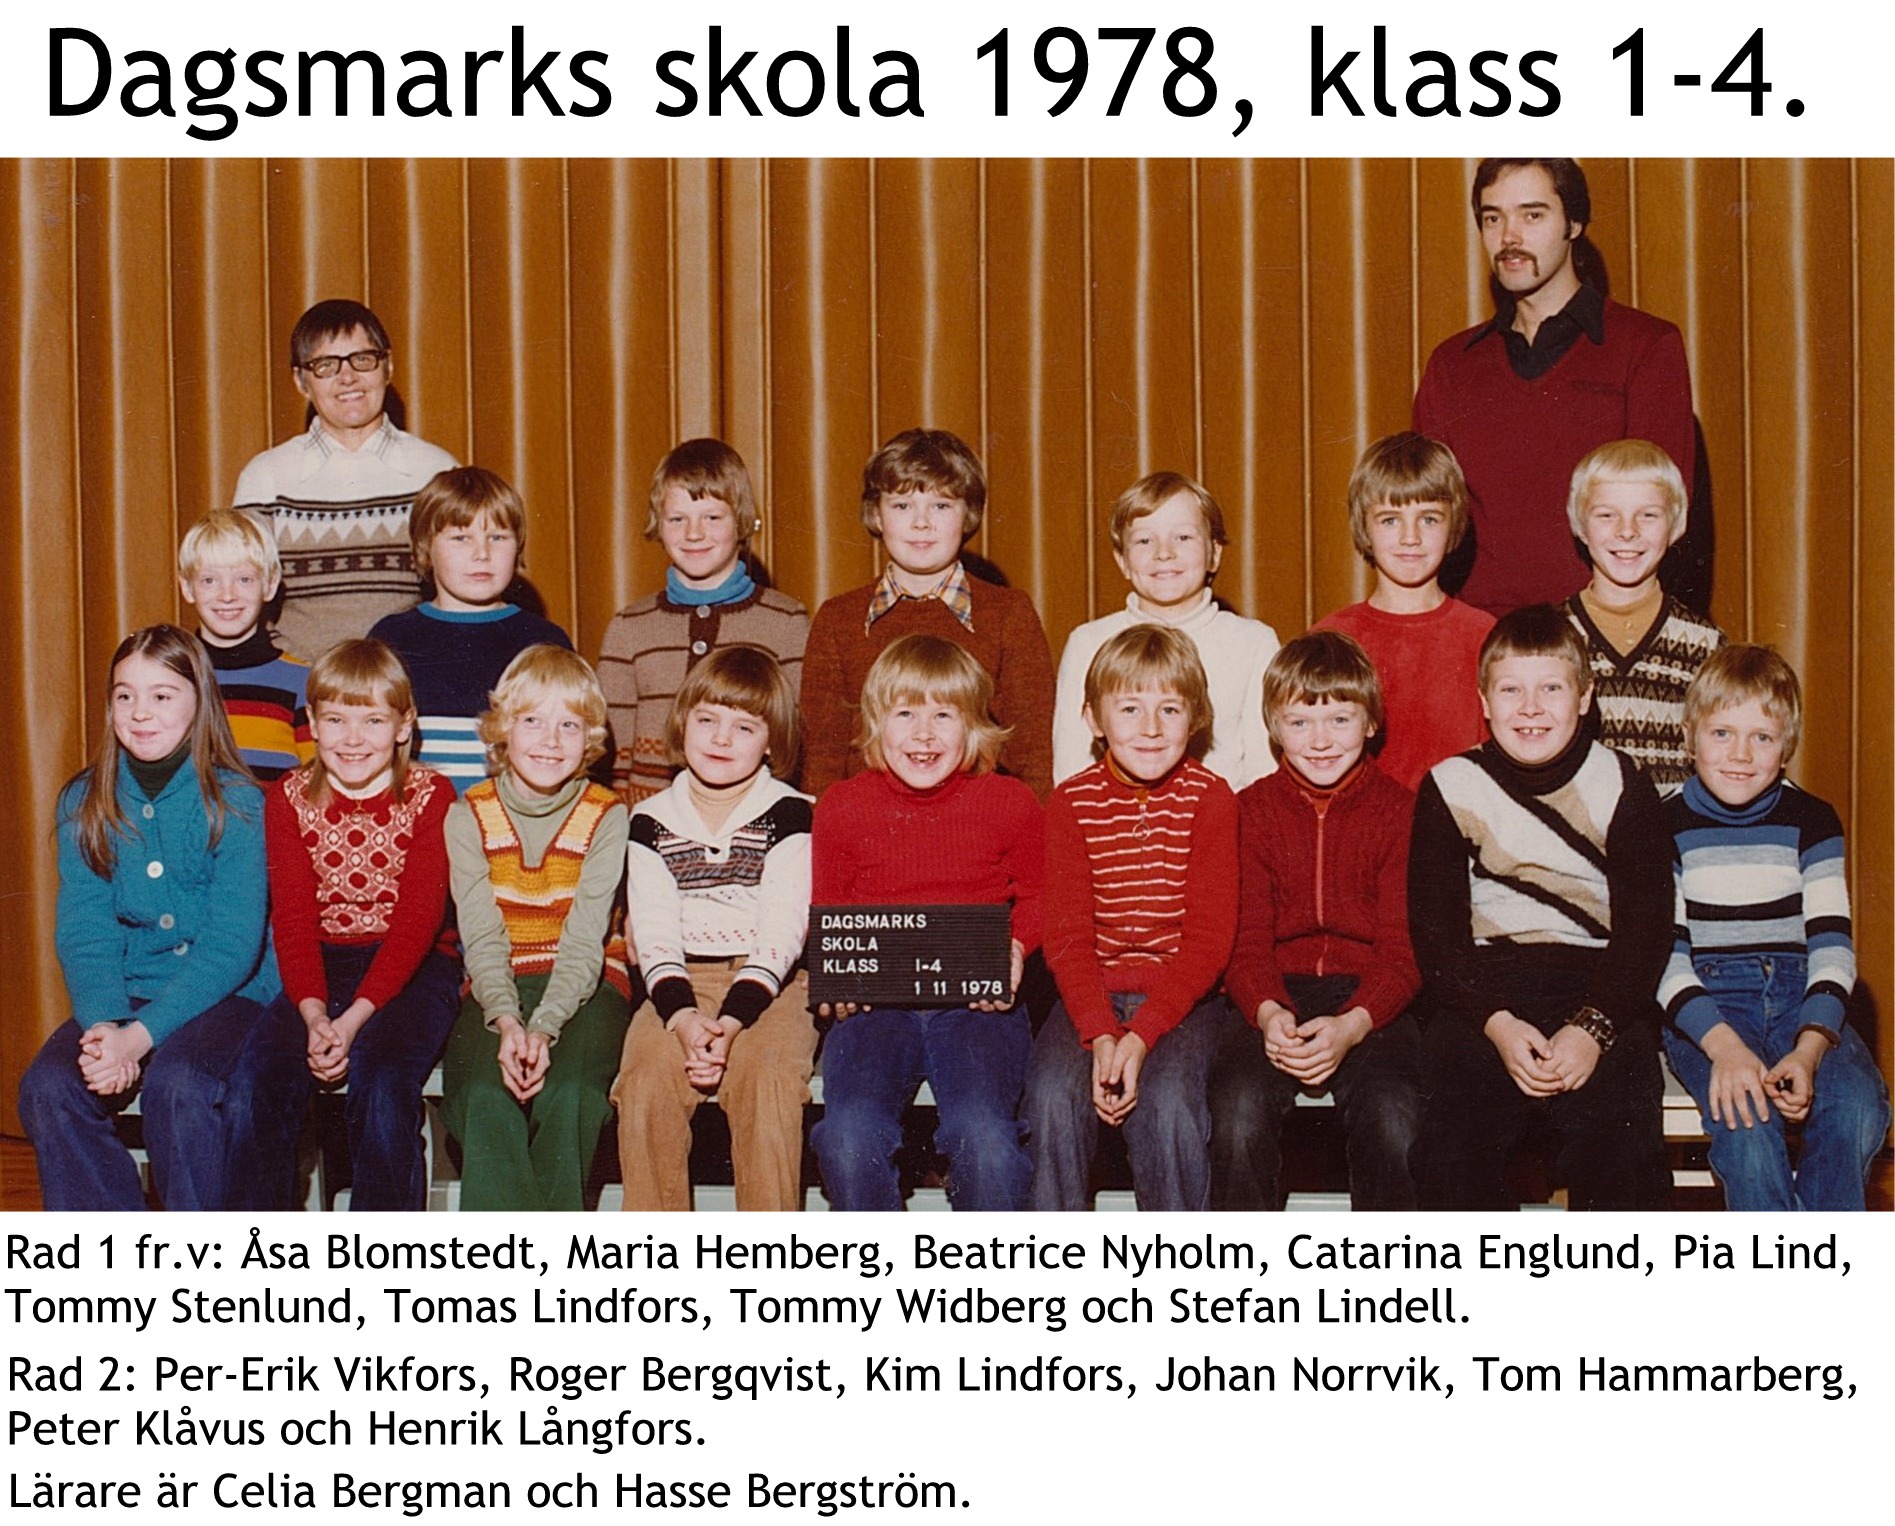 1978 Dagsmark skola klasserna 1-4